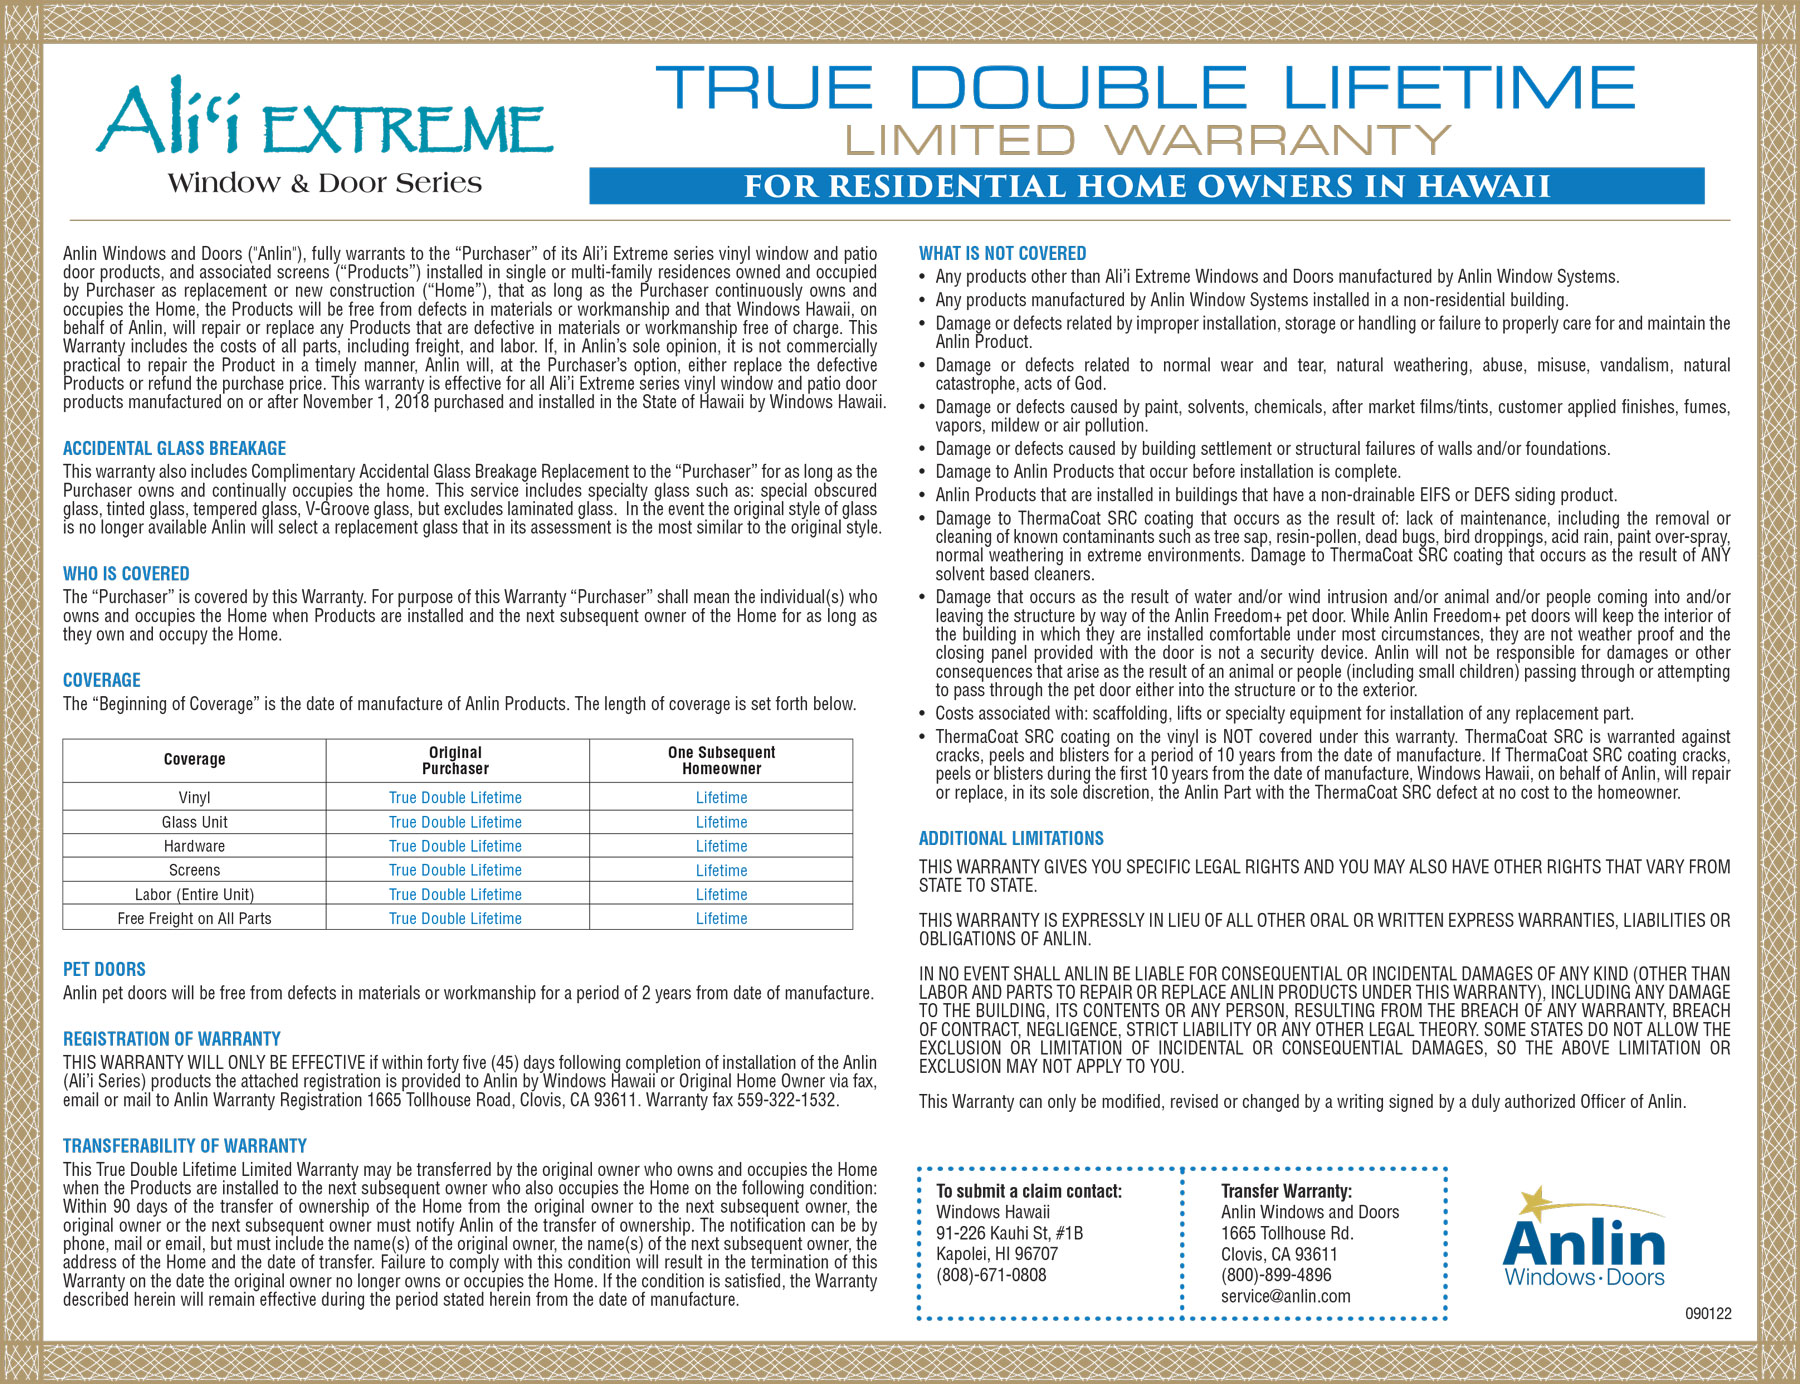 Alii extreme true double lifetime warranty